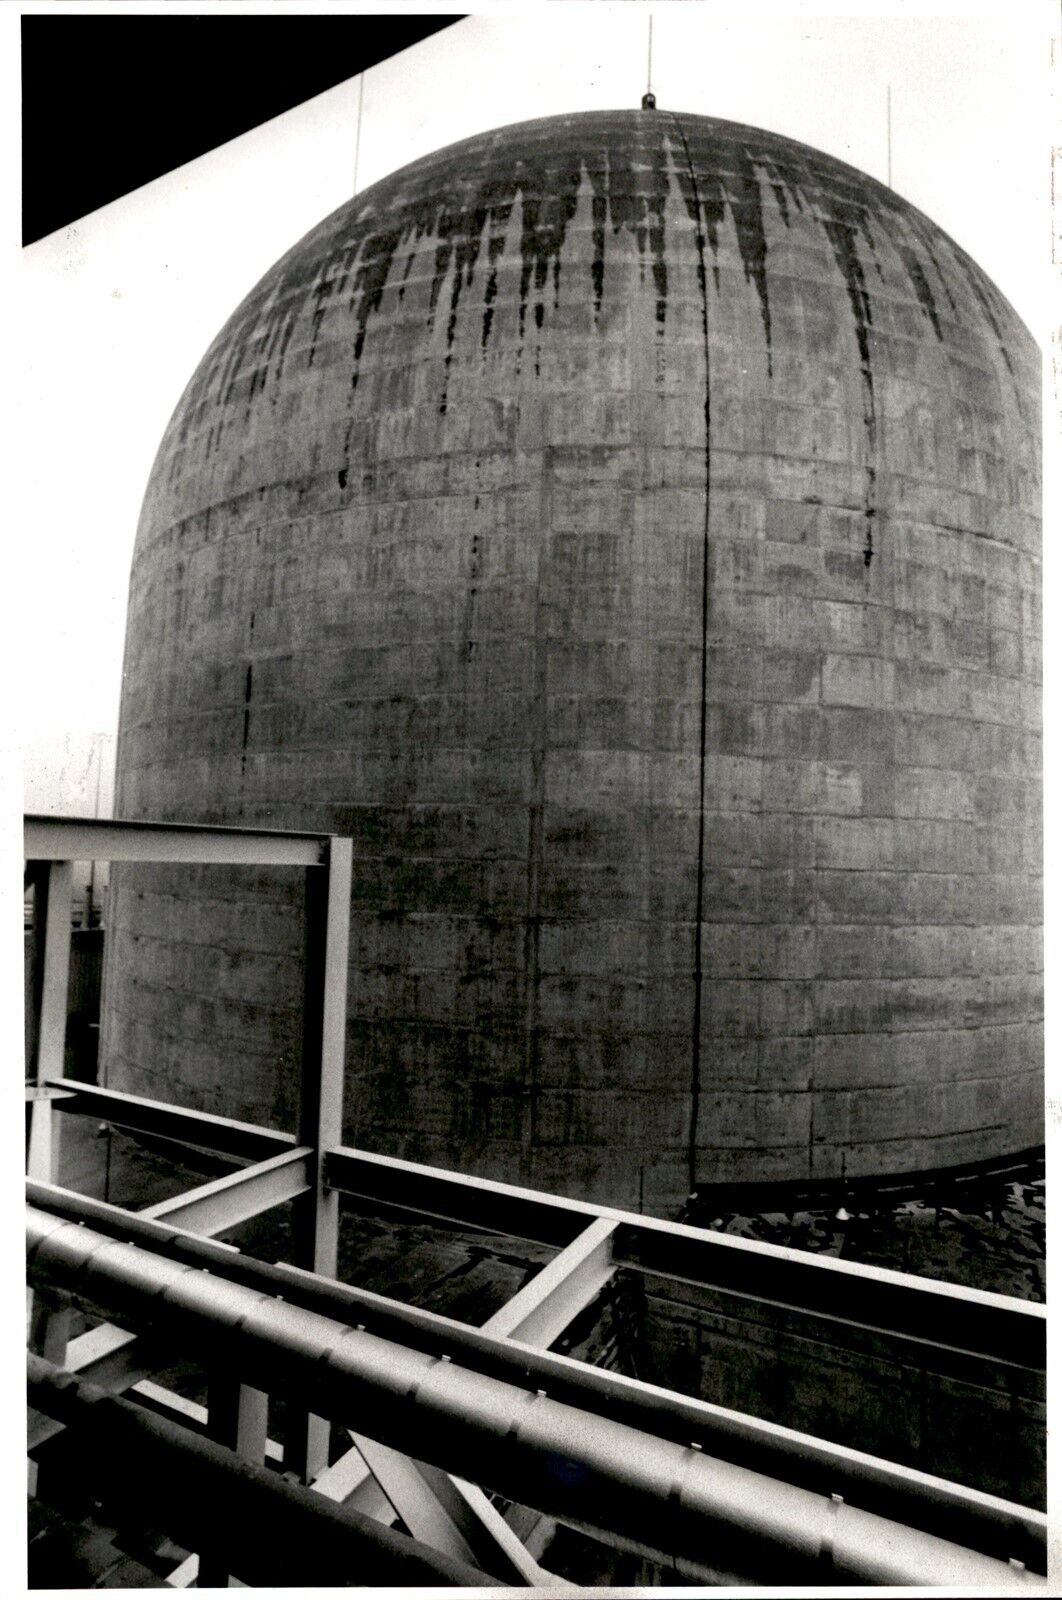 LG58 1990 Orig Jim Davis Photo SEABROOK STATION Reactor from nside Control Room